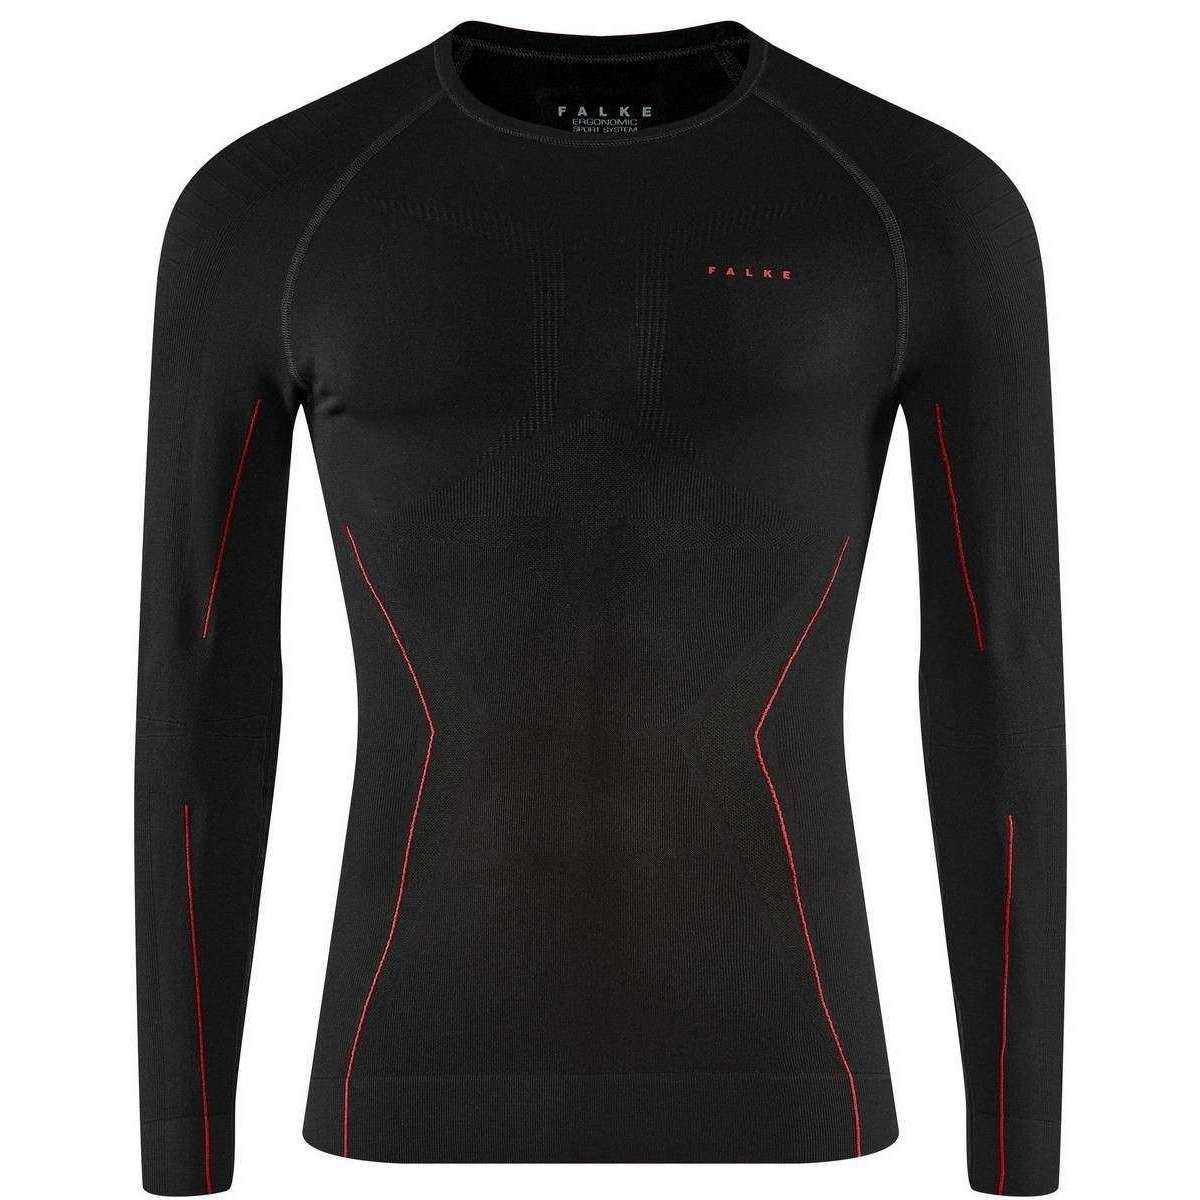 Falke Maximum Warm Long Sleeve Shirt - Black/Fuego Red